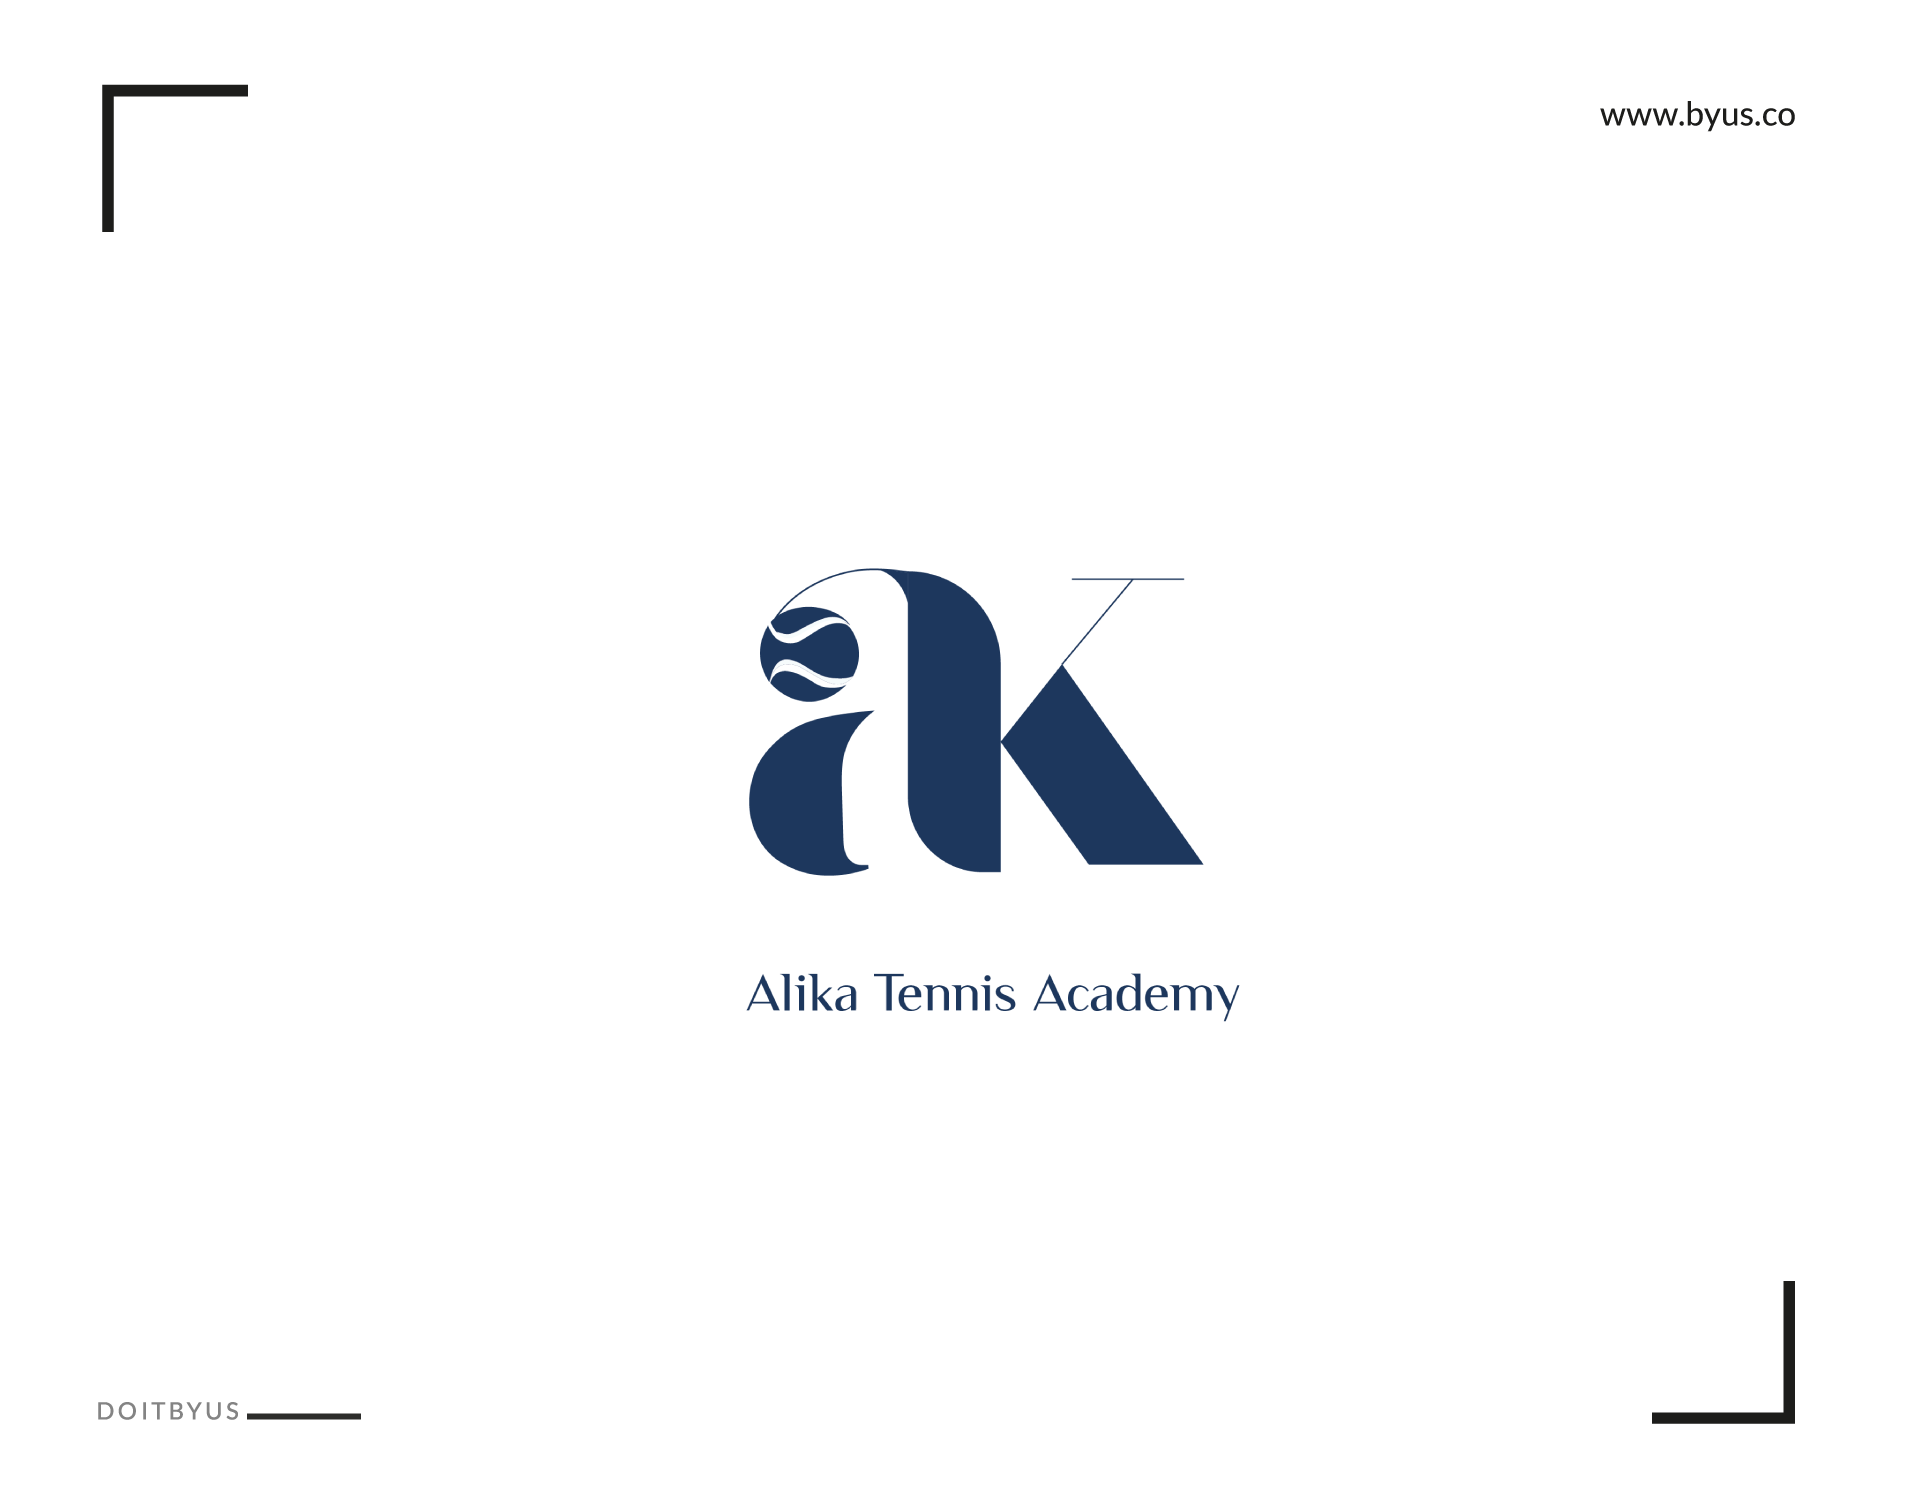 Alika tennis academy logo